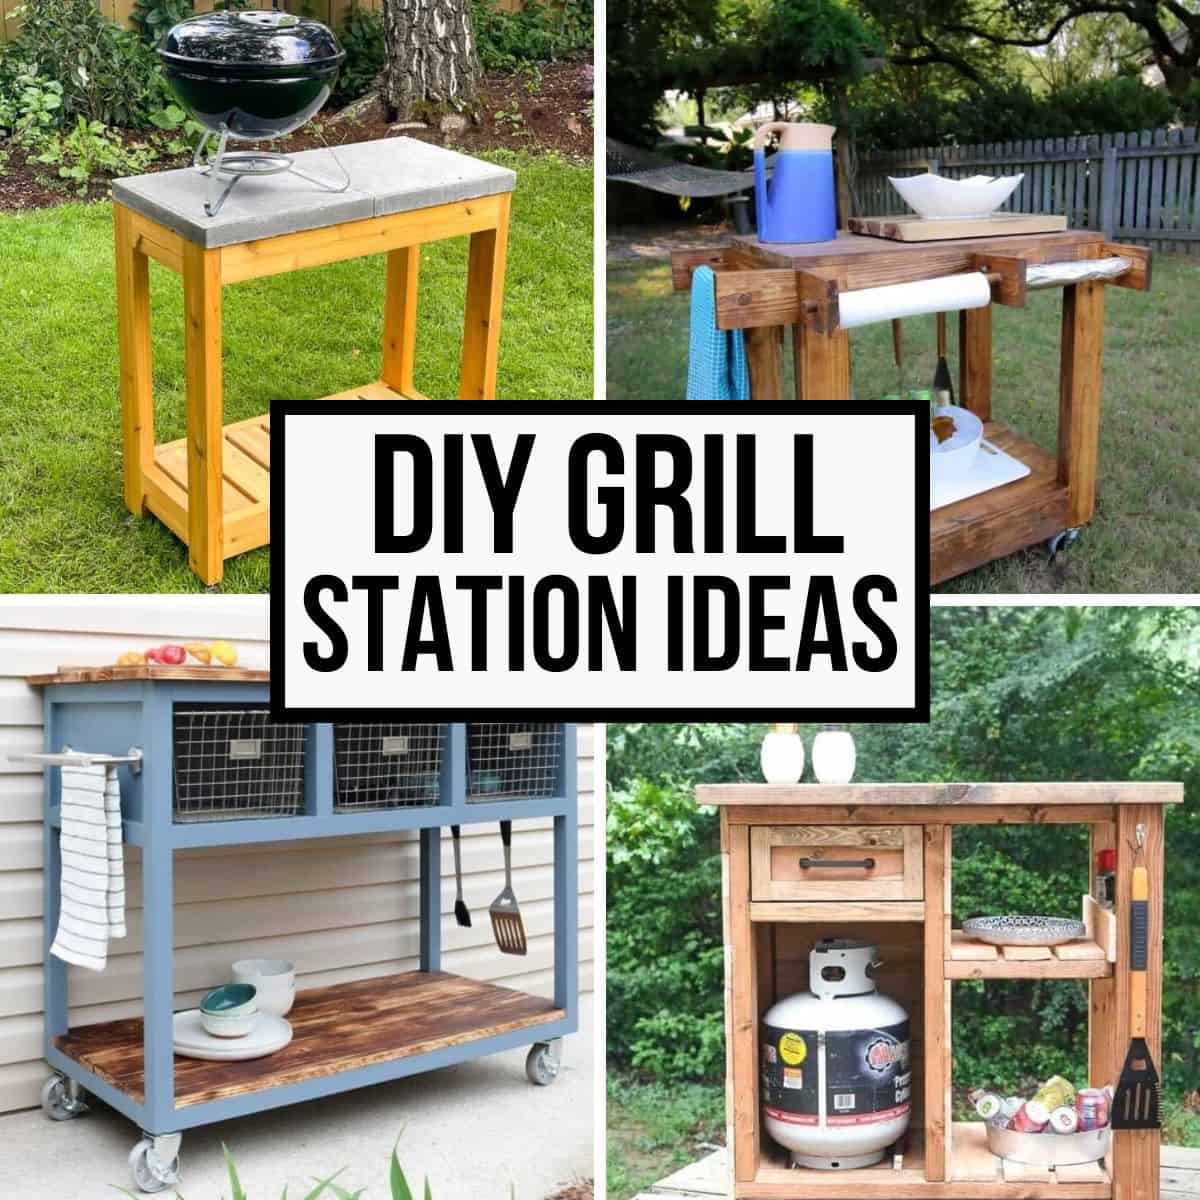 11 Easy Diy Outdoor Grill Station Ideas